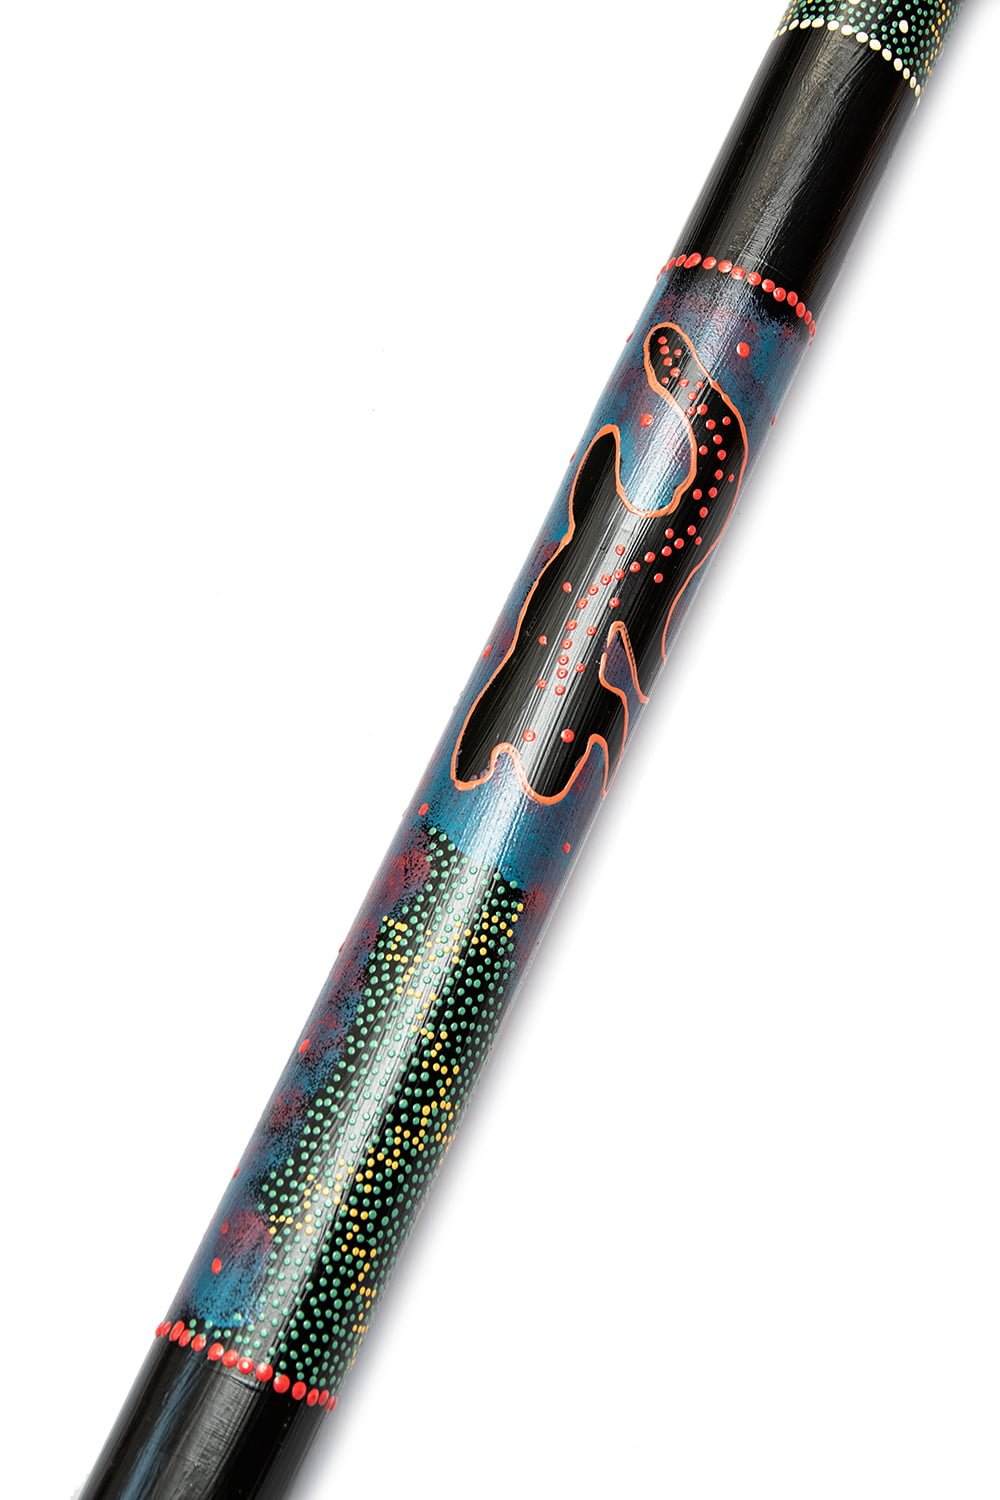 TOCA DIDG-PG ディジュリドゥ 竹製 47インチ Bamboo Didgeridoo - Geko トカ ペリーズ 50%OFF!